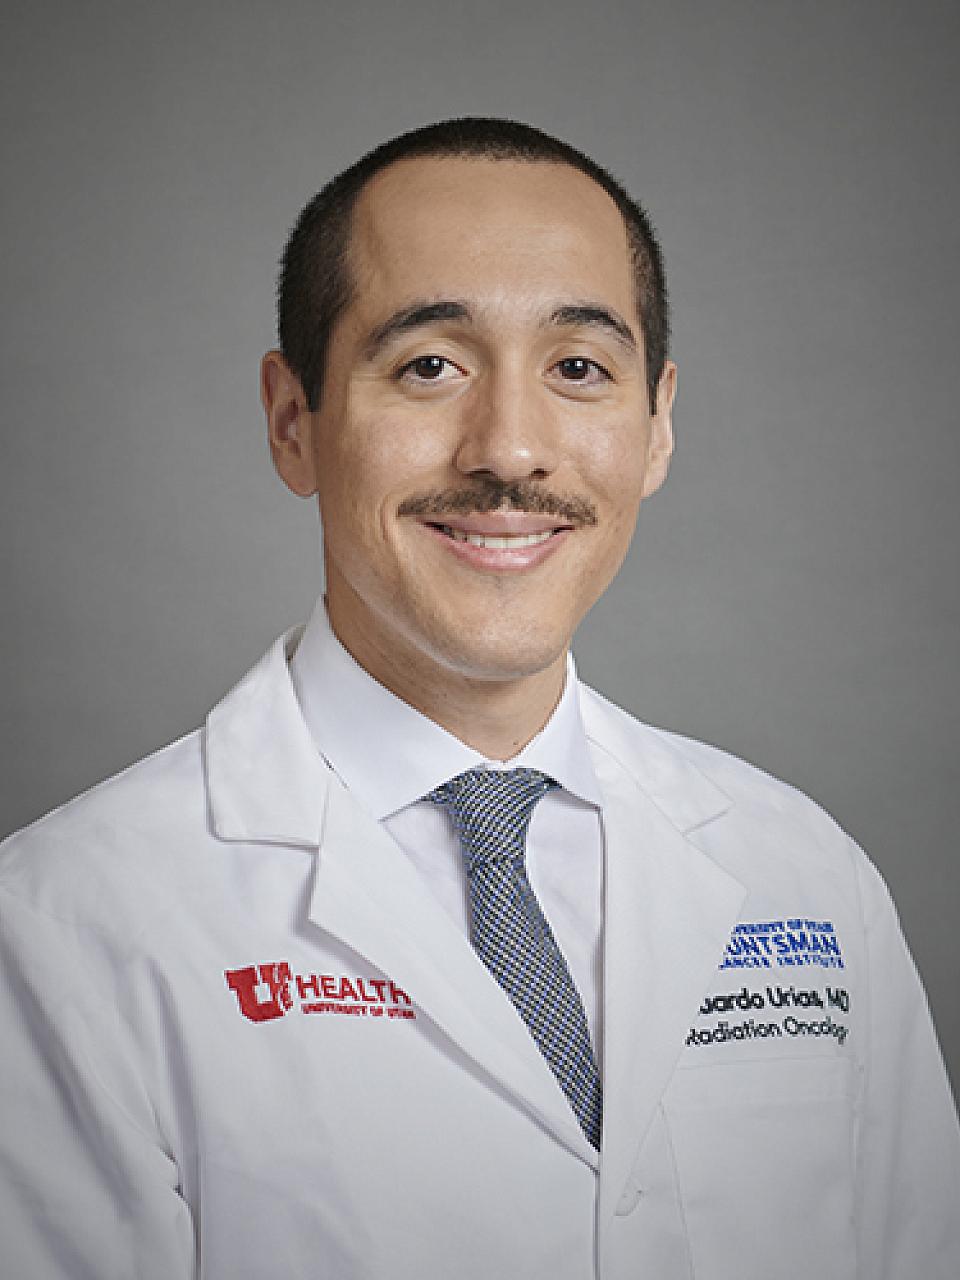 Eduardo Urias, MD, MBA